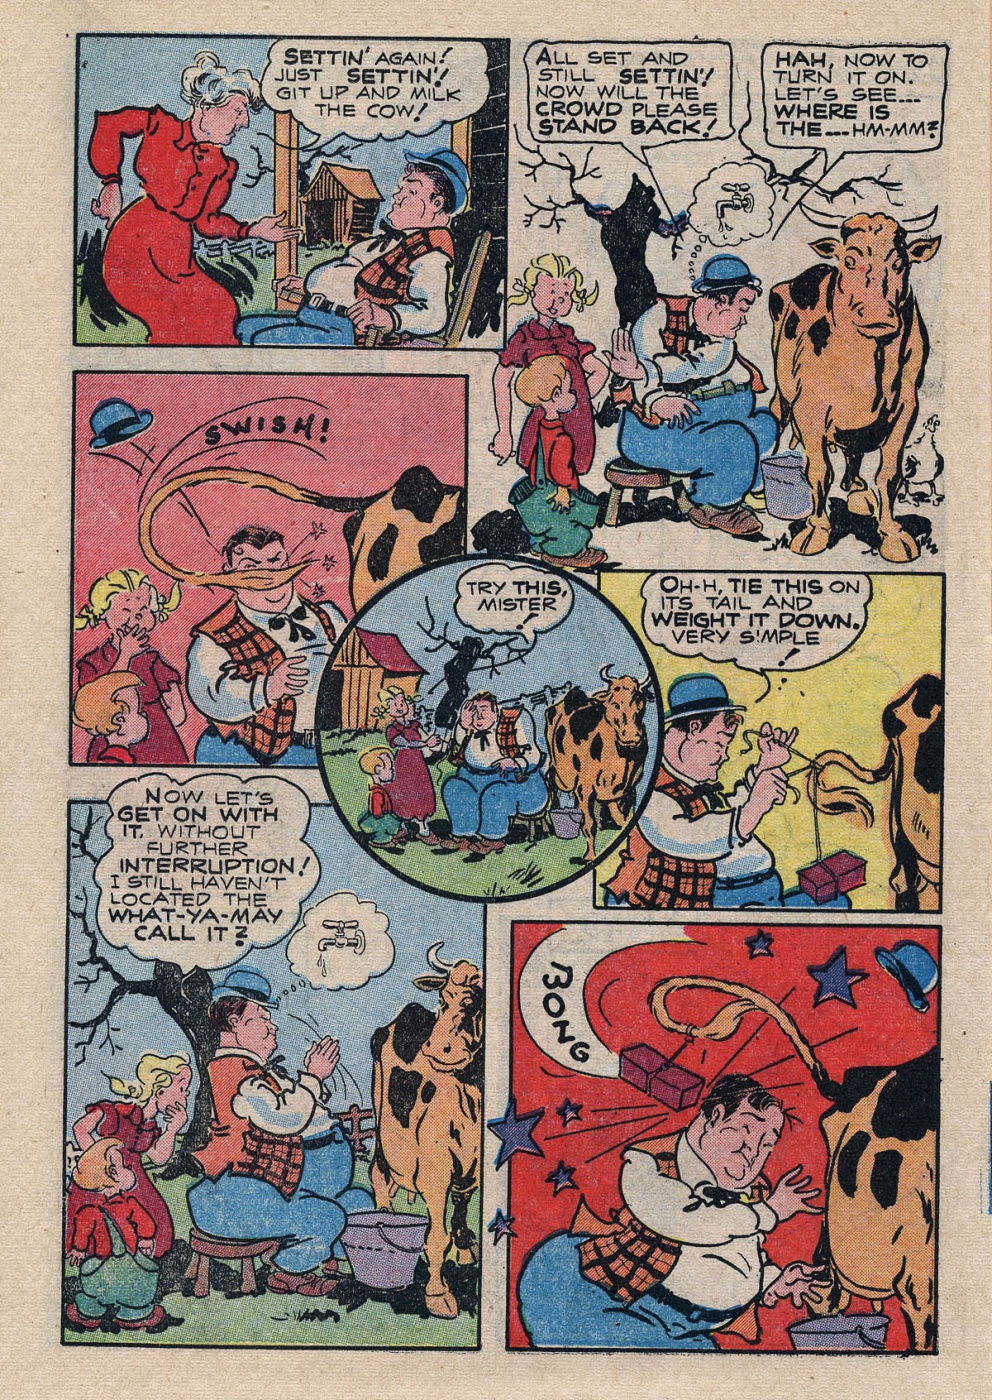 Funny Comic Strips - Abbott and Costello 001 (Feb 1948) 24